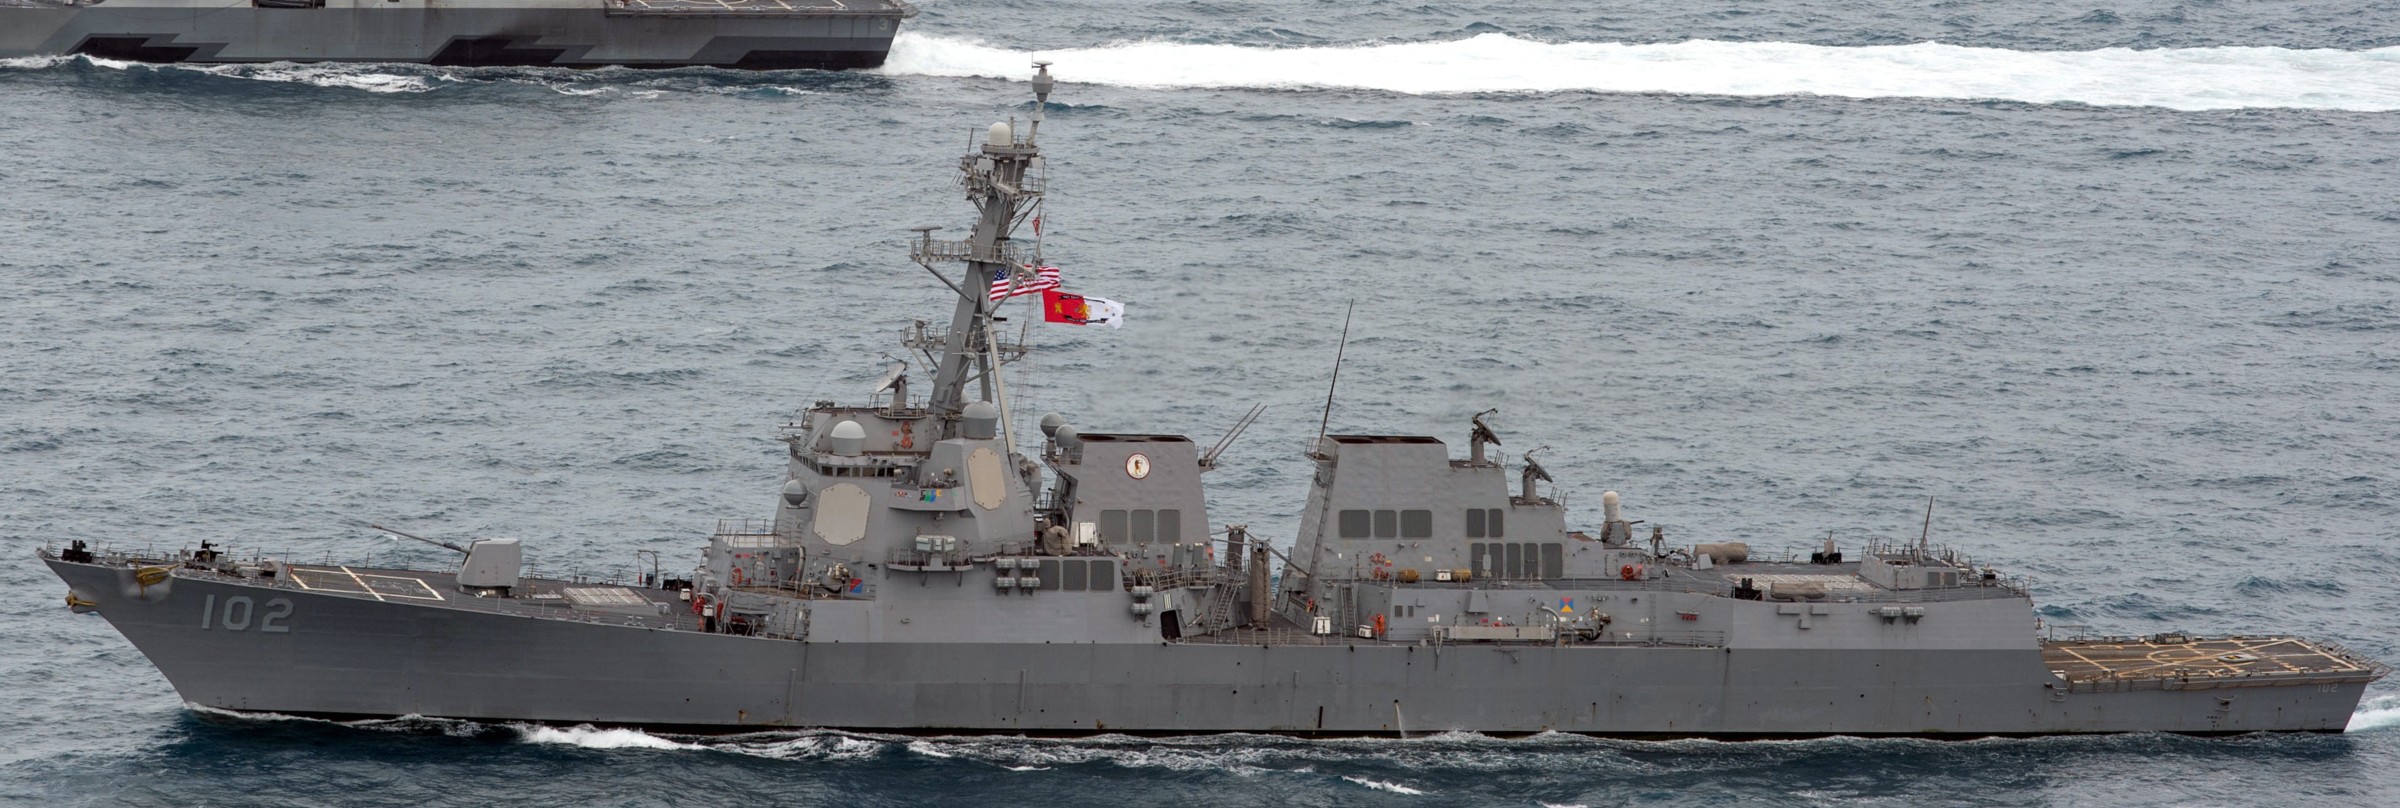 ddg-102 uss sampson arleigh burke class guided missile destroyer aegis us navy 12